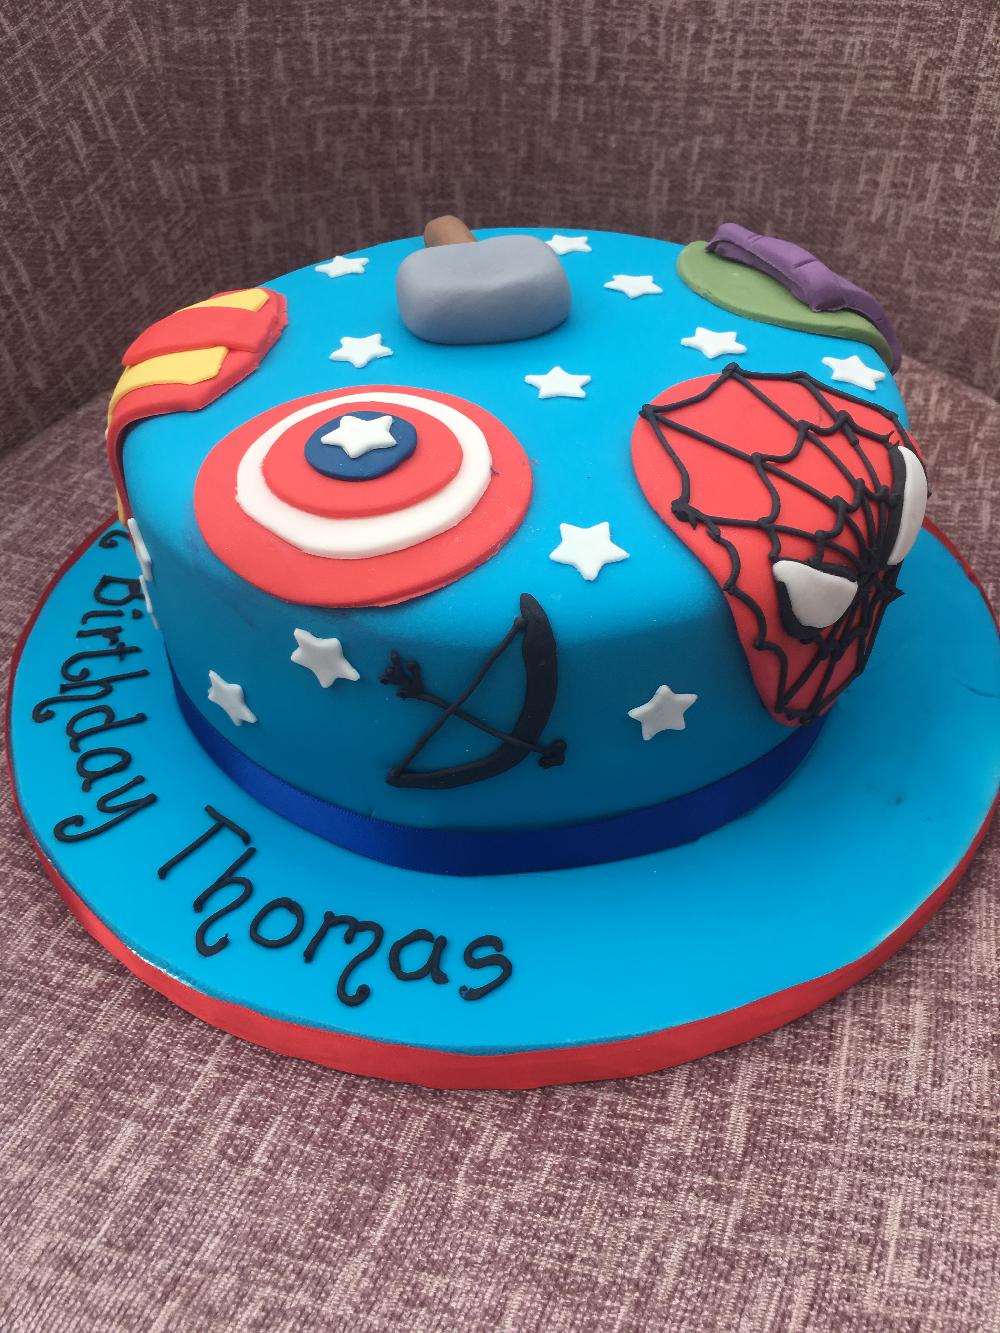 Superheroes Cake